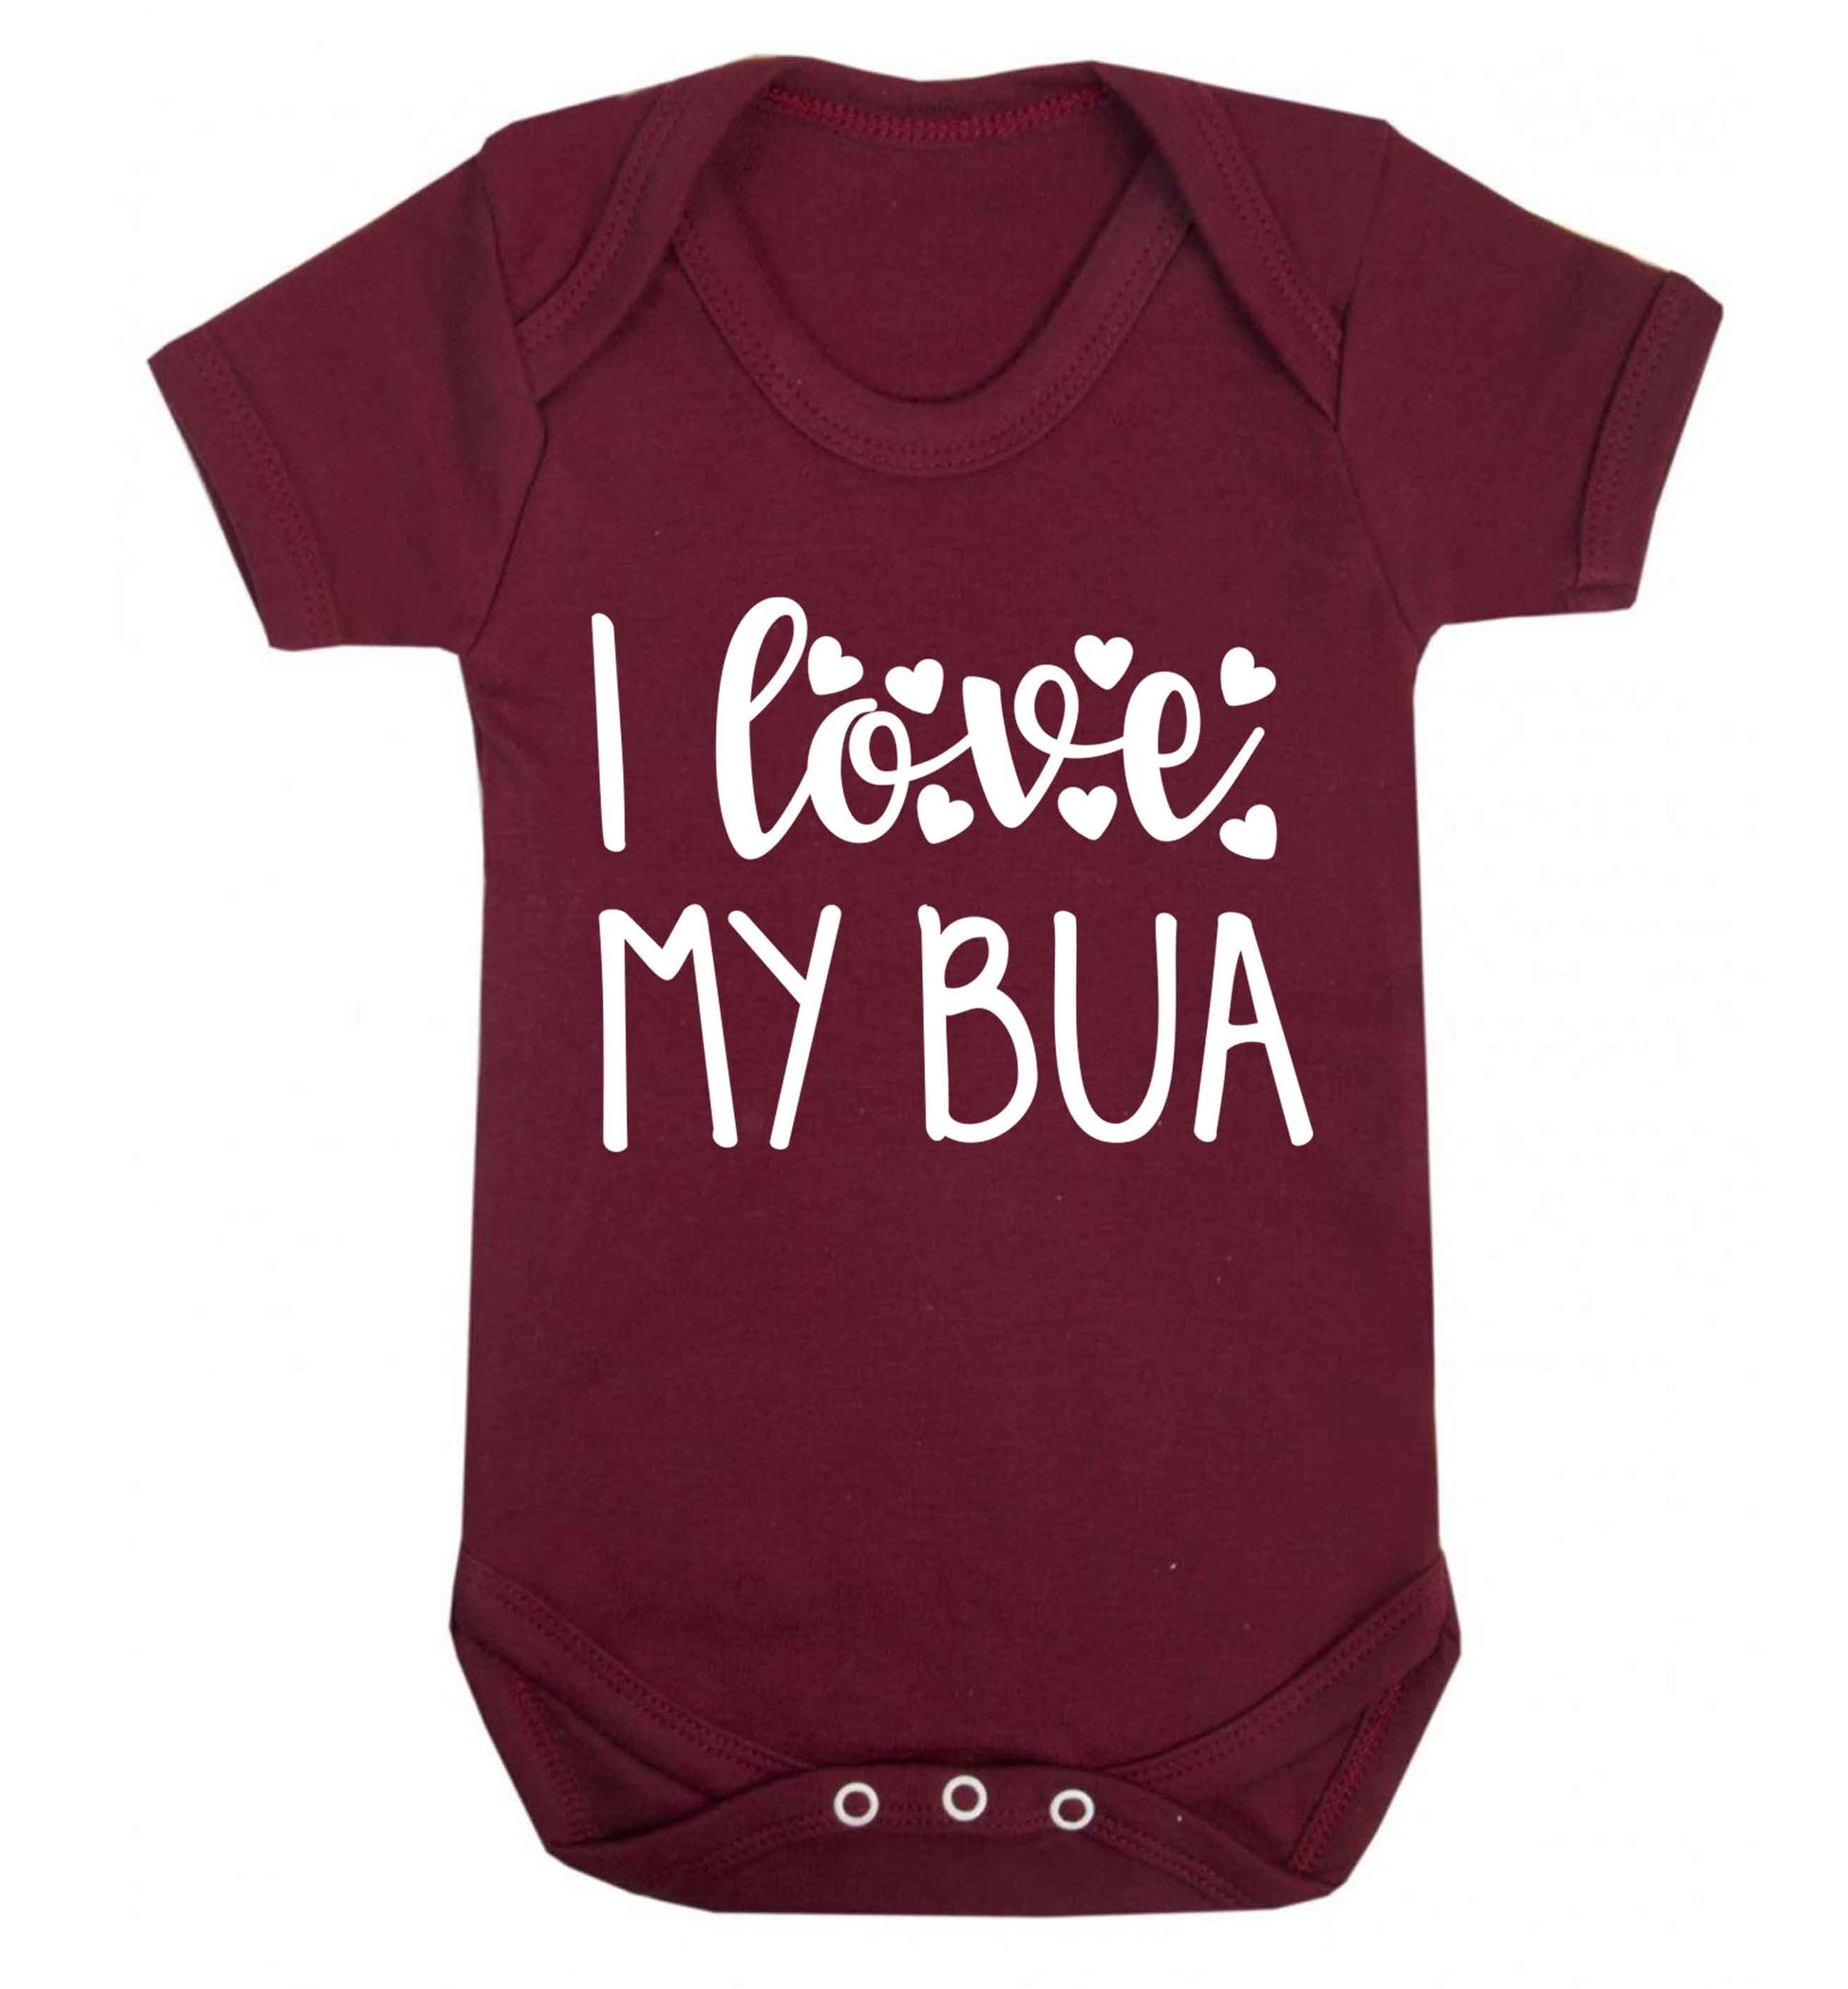 I love my bua Baby Vest maroon 18-24 months